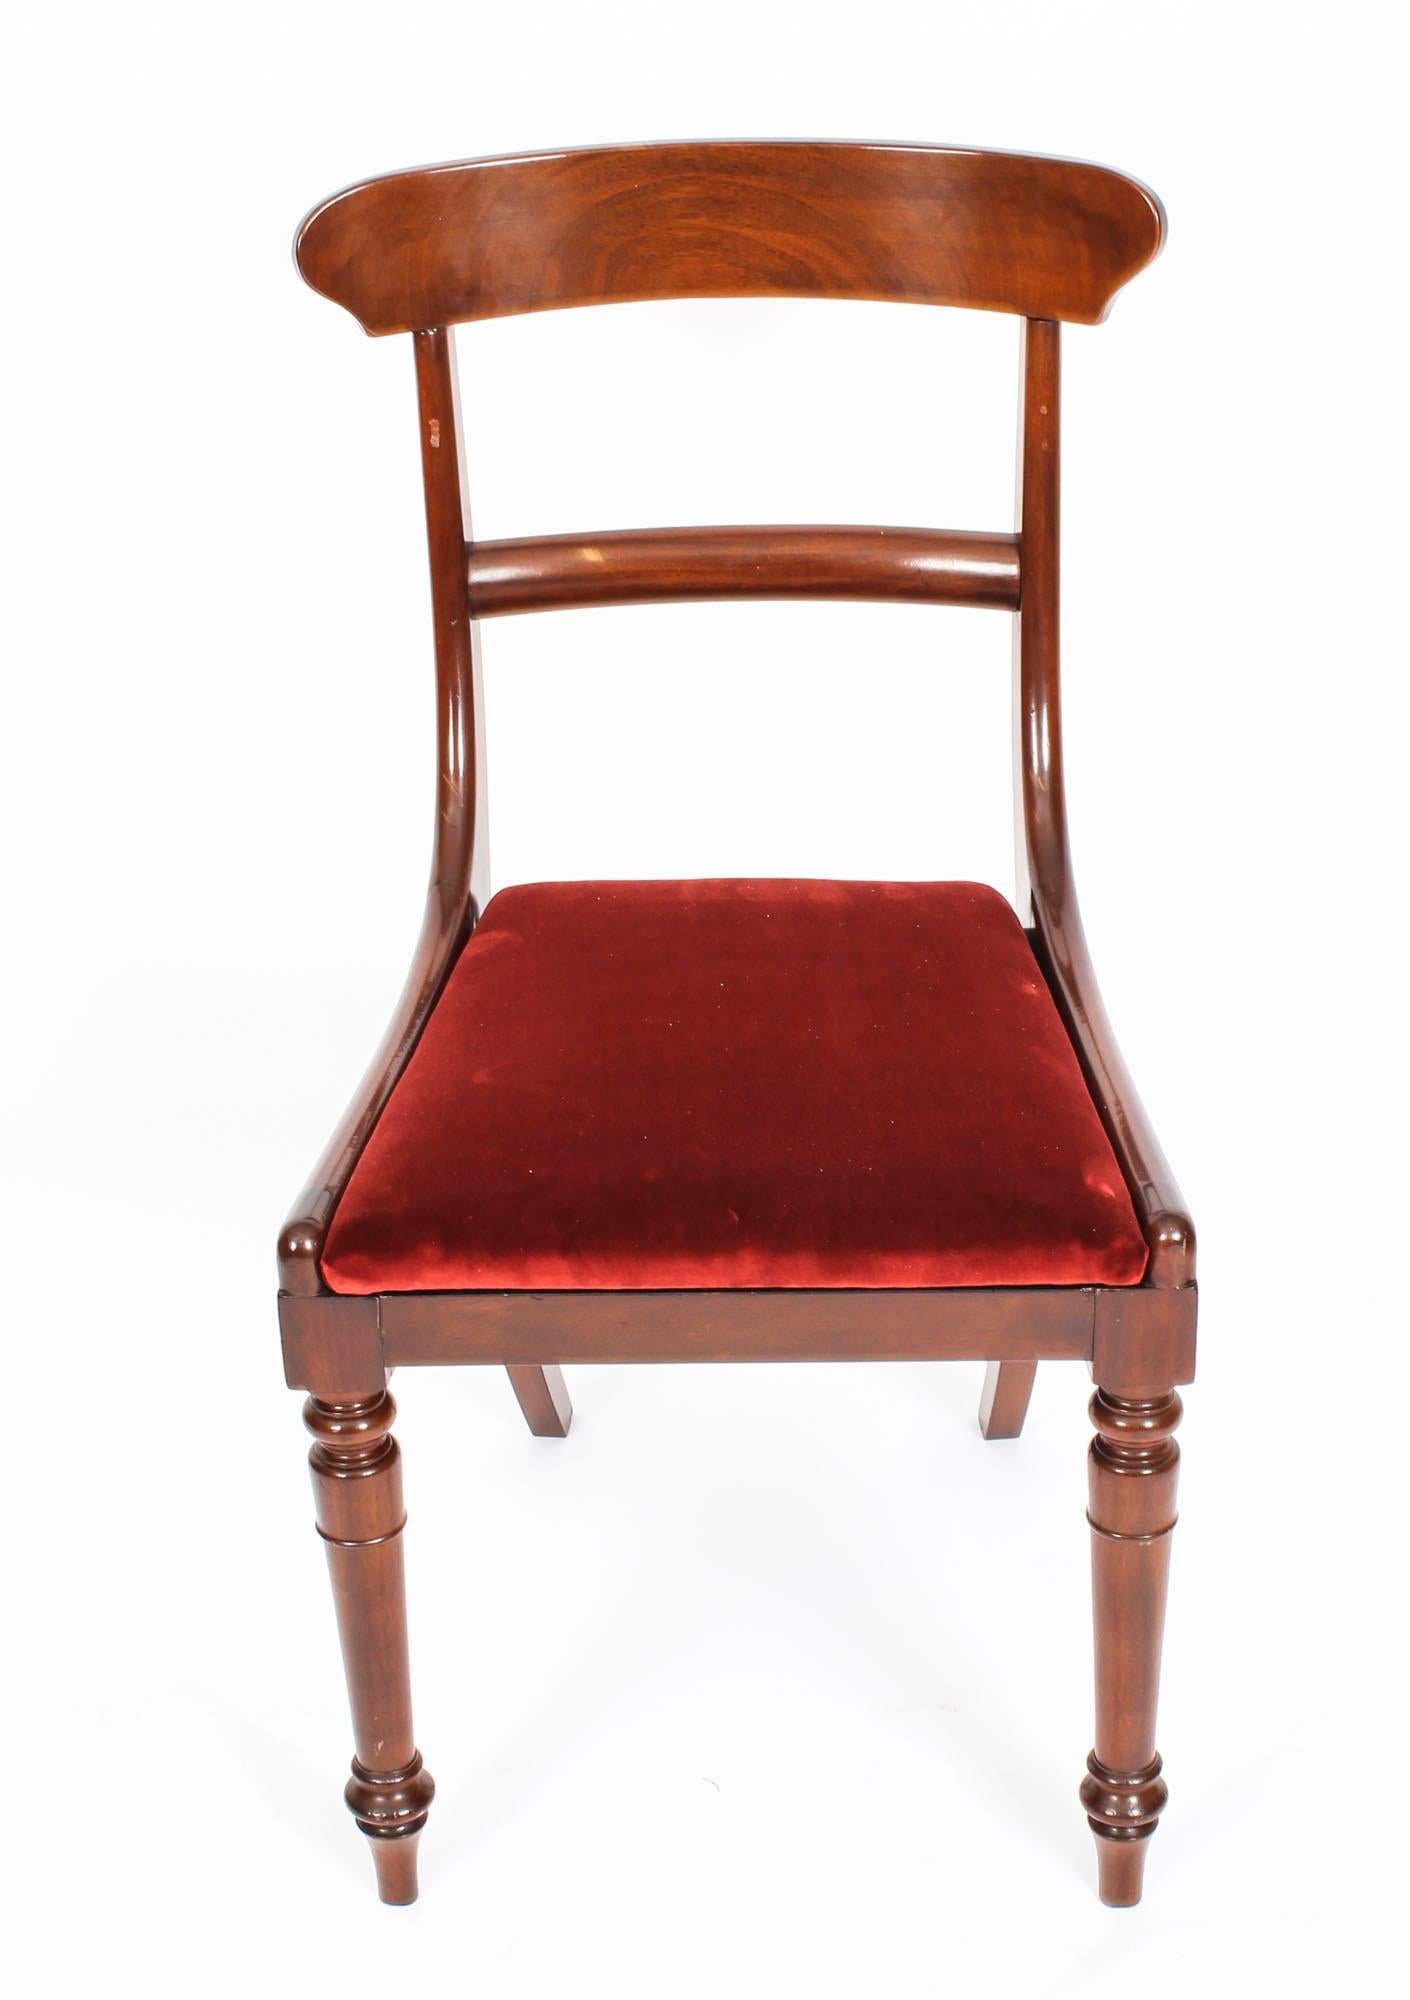 Antique Pair of Victorian Mahogany Desk Chairs, 19th Century (Viktorianisch)